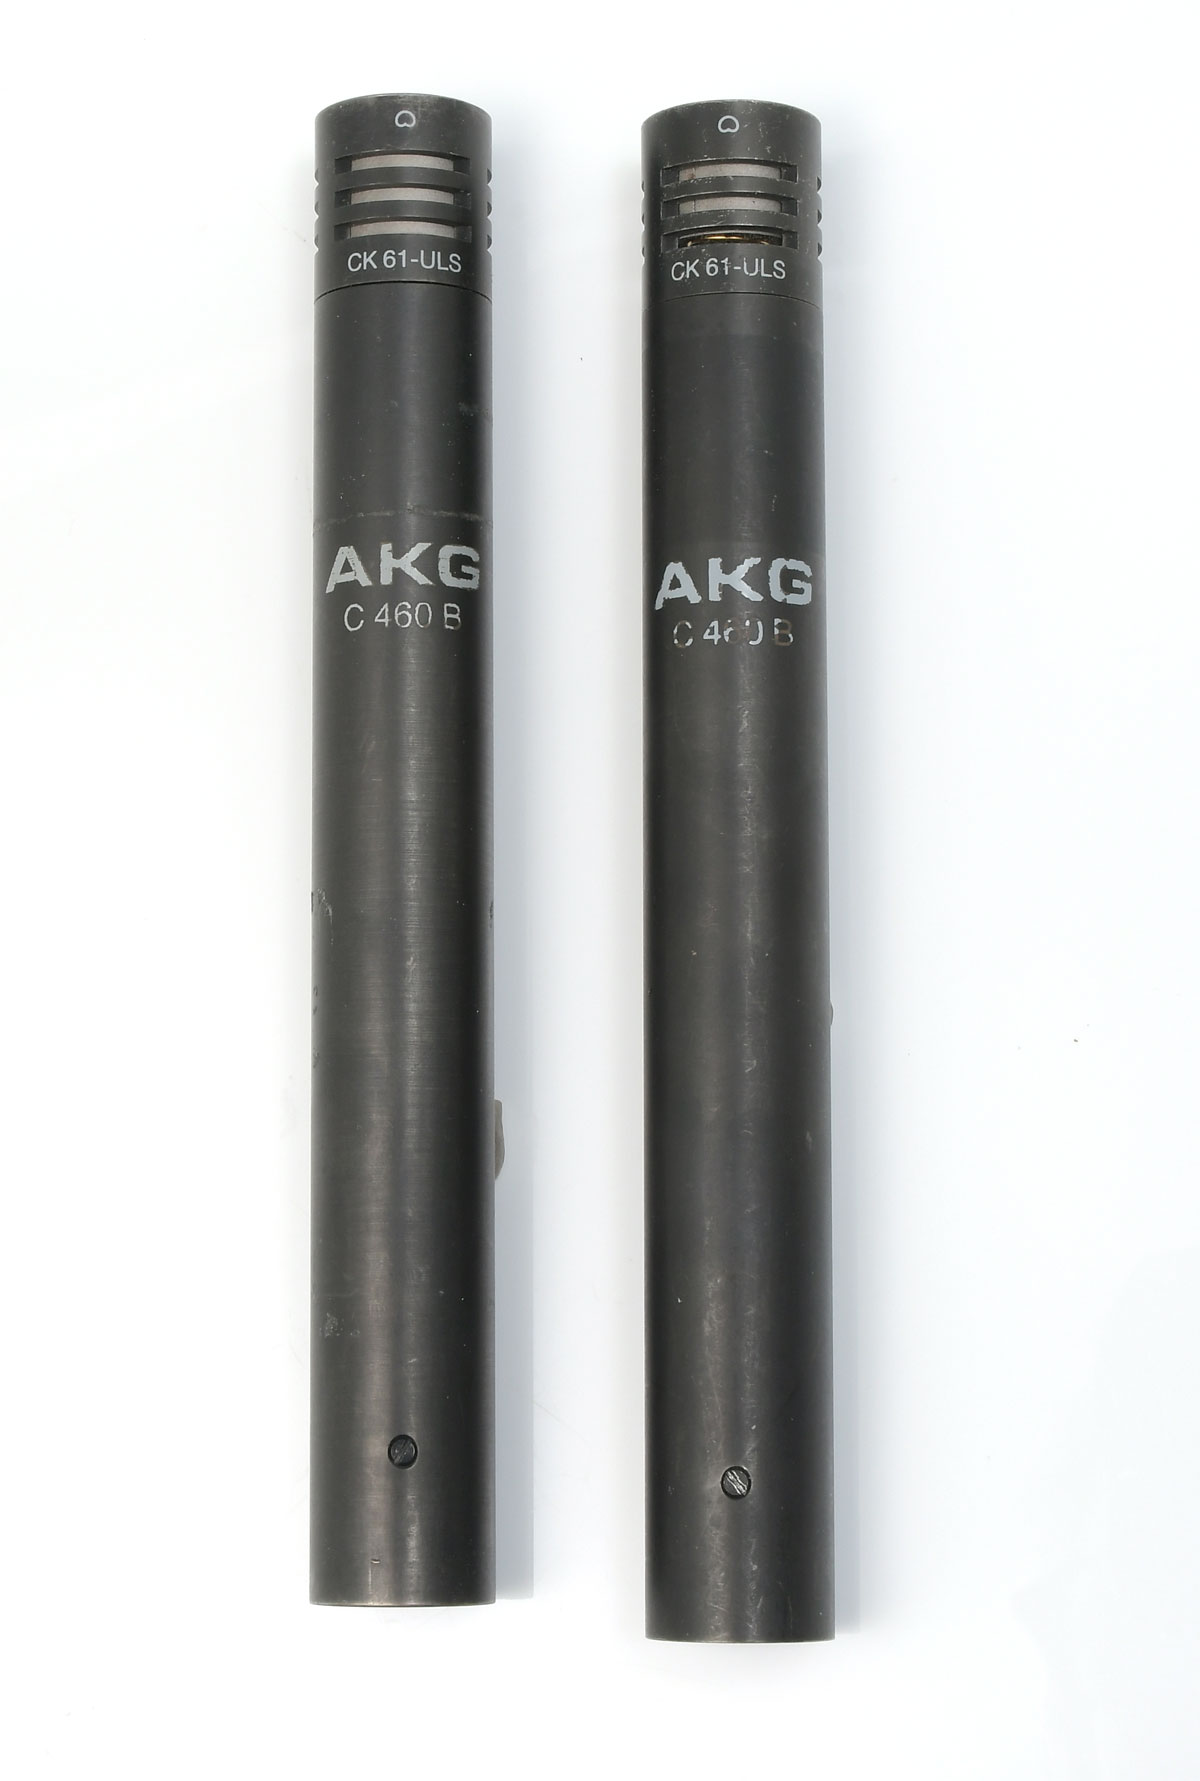 2 PC. AKG C 460 B MICROPHONES: